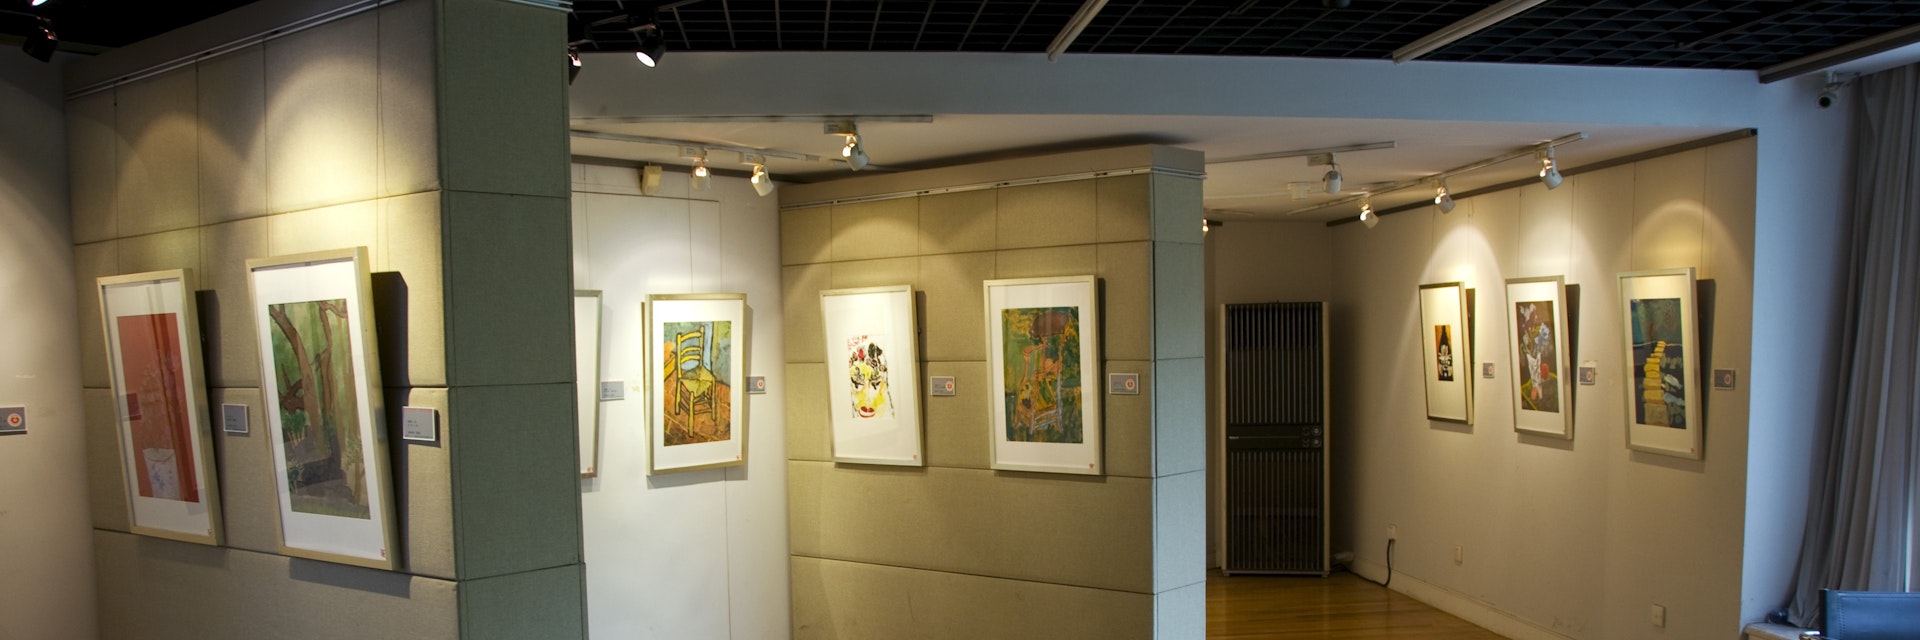 Liu Haisu Art Gallery interior.